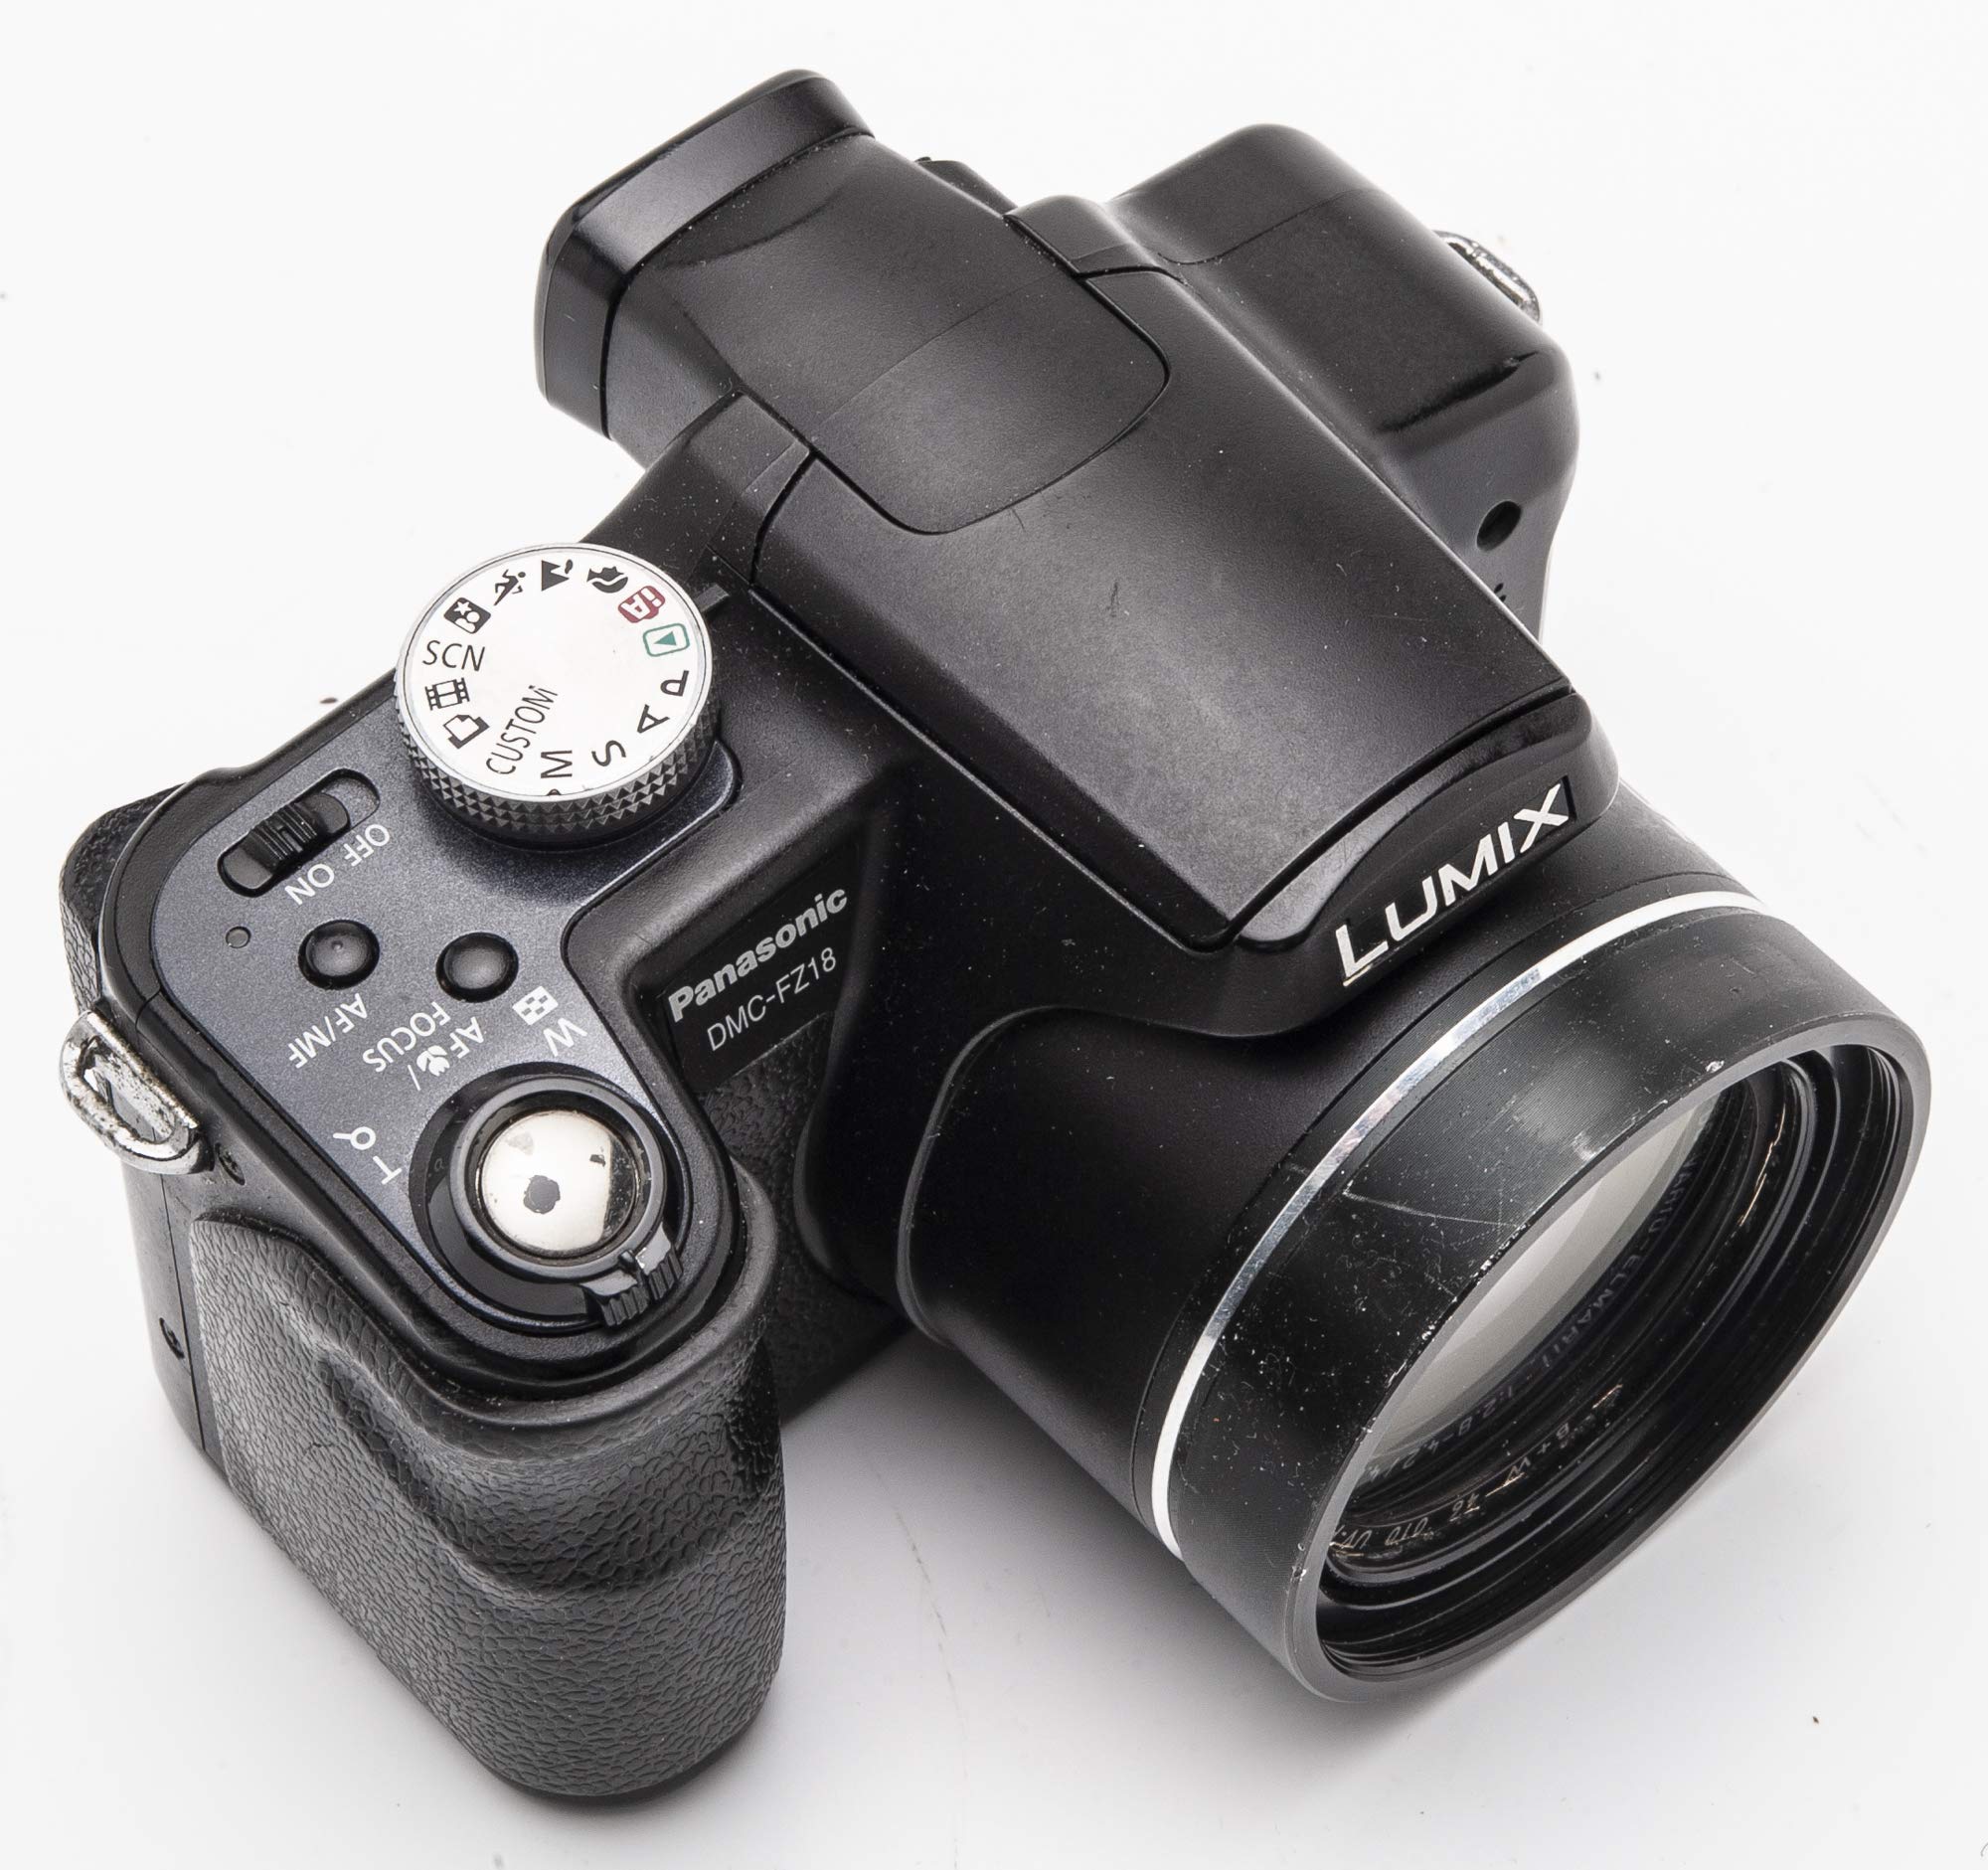 Panasonic Lumix DMC-FZ18K 8.1MP Digital Camera with 18x Wide Angle MEGA Optical Image Stabilized Zoom (Black)